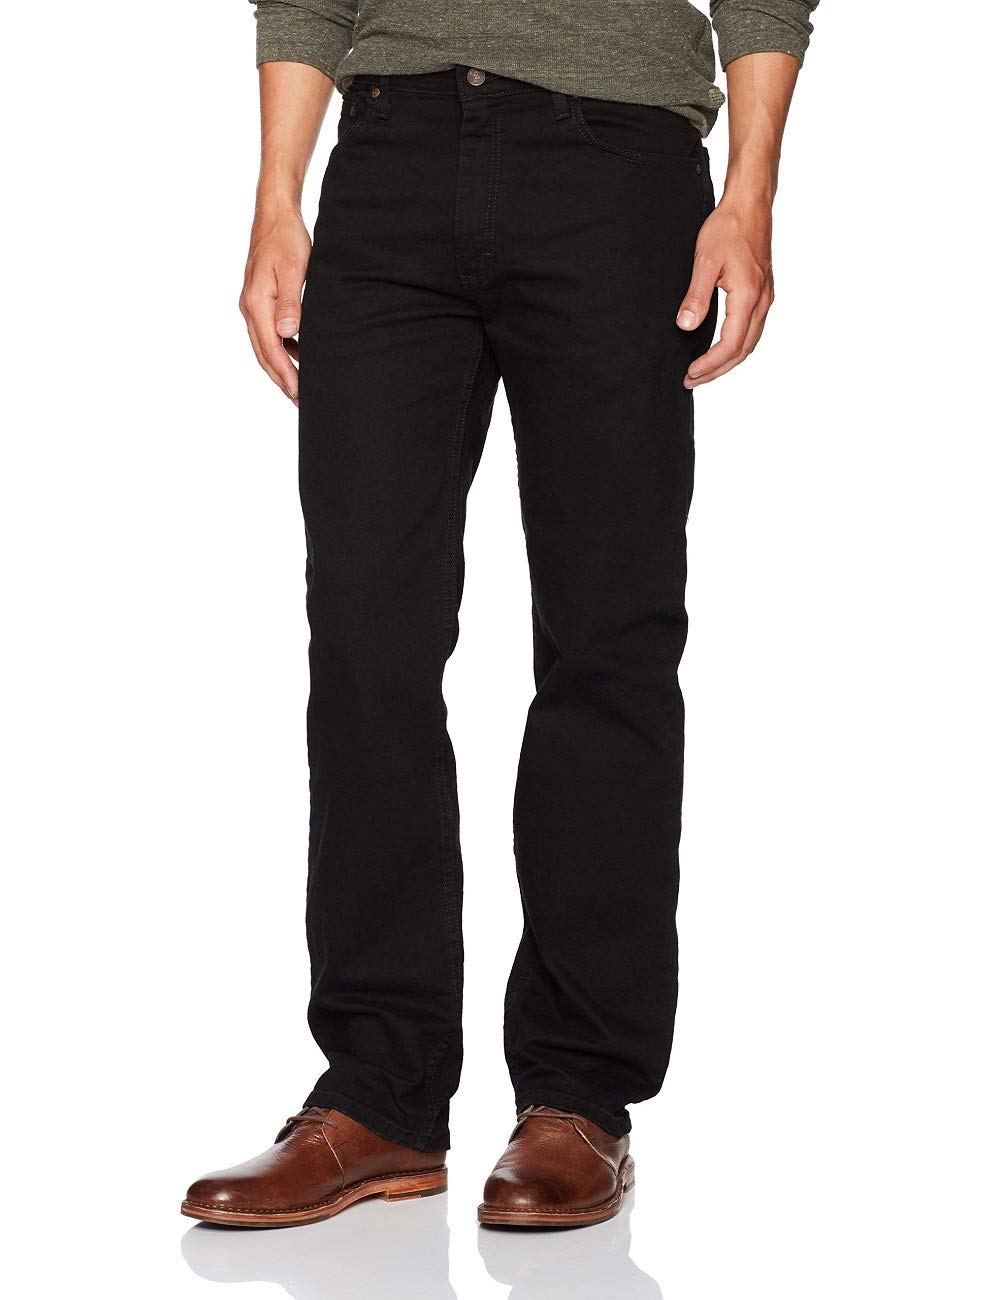 Wrangler Authentics Men's Regular Fit Comfort Flex Waist Jean, Black, 32W x 32L